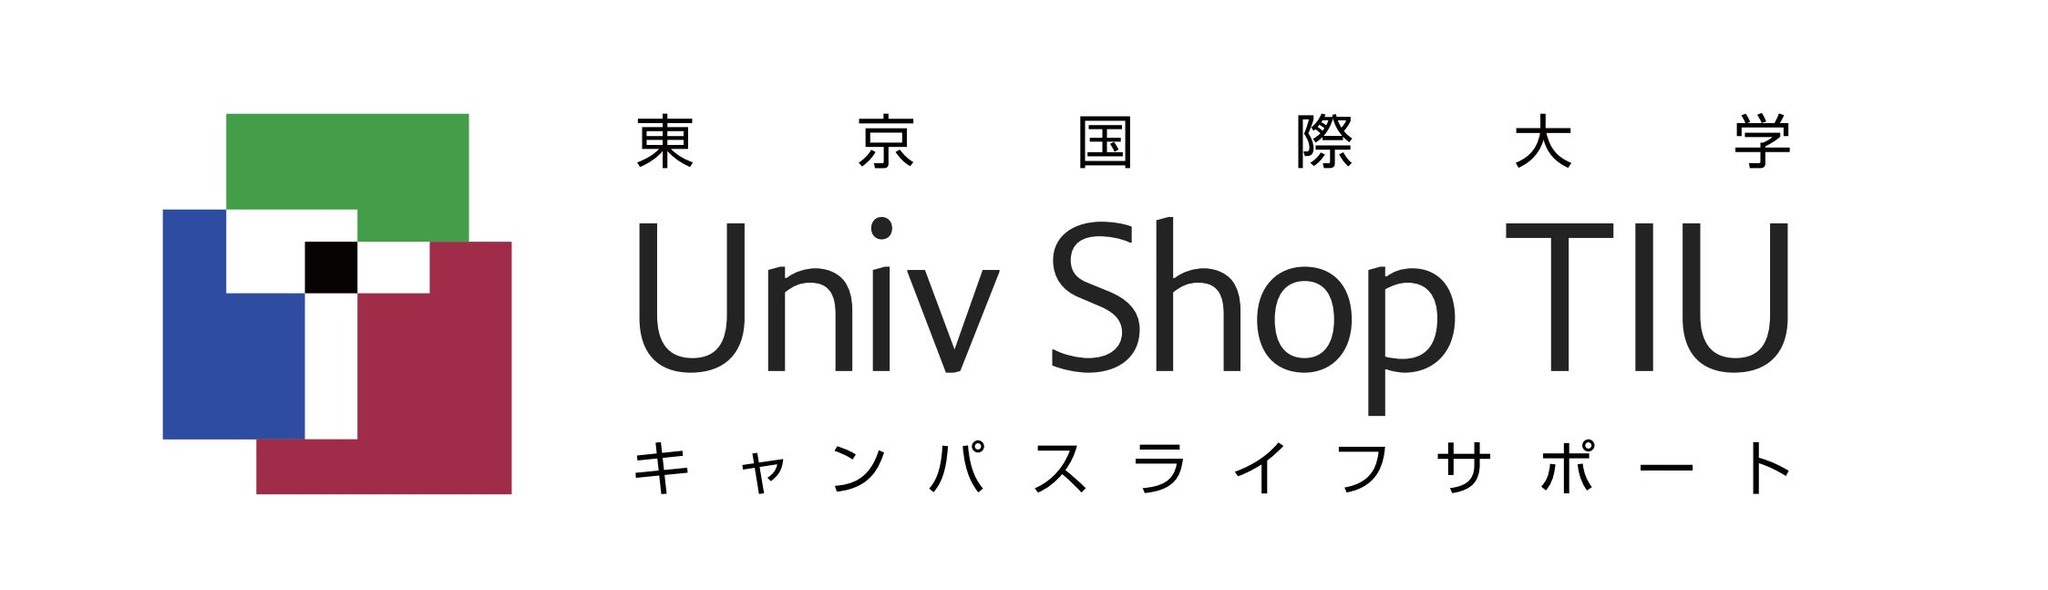 Univ Shop TIU